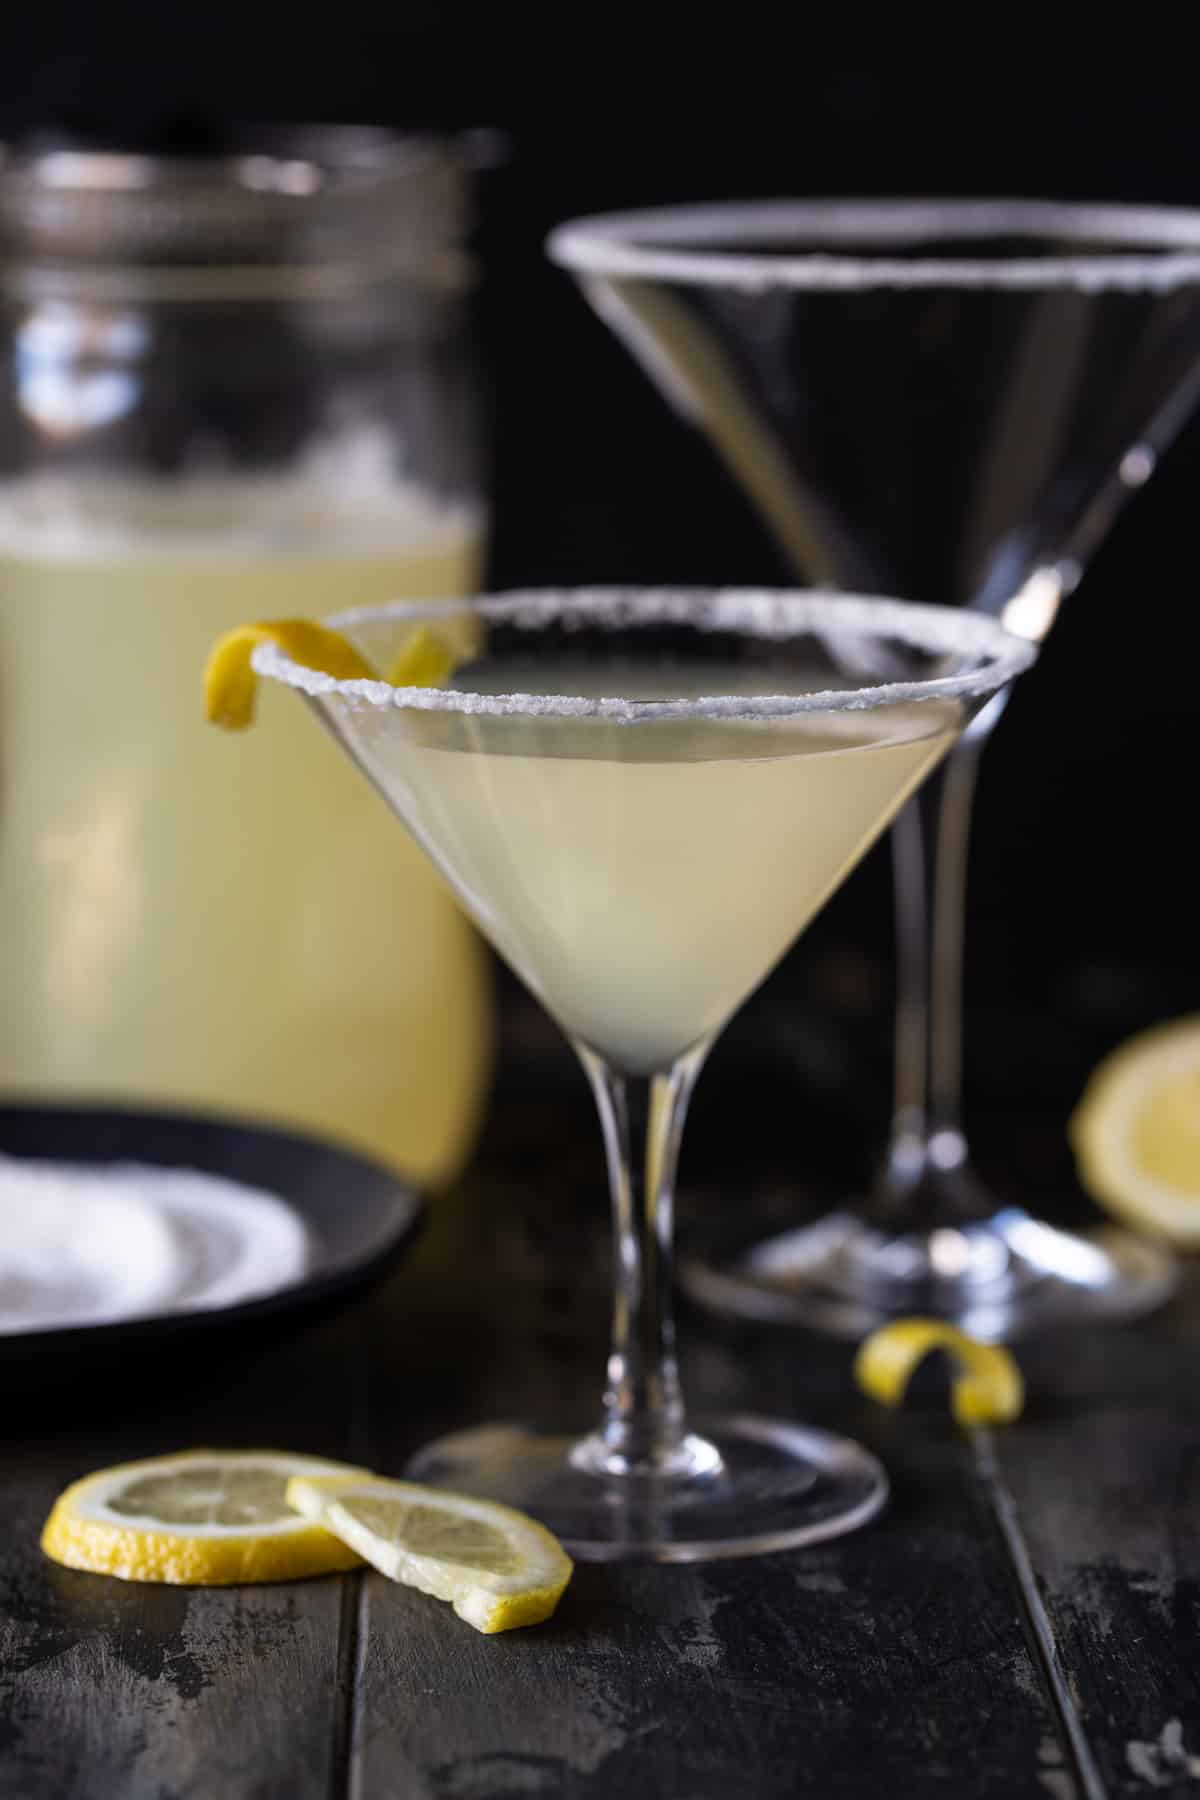 Lemon drop martinis in glasses with lemon twists for garnish.